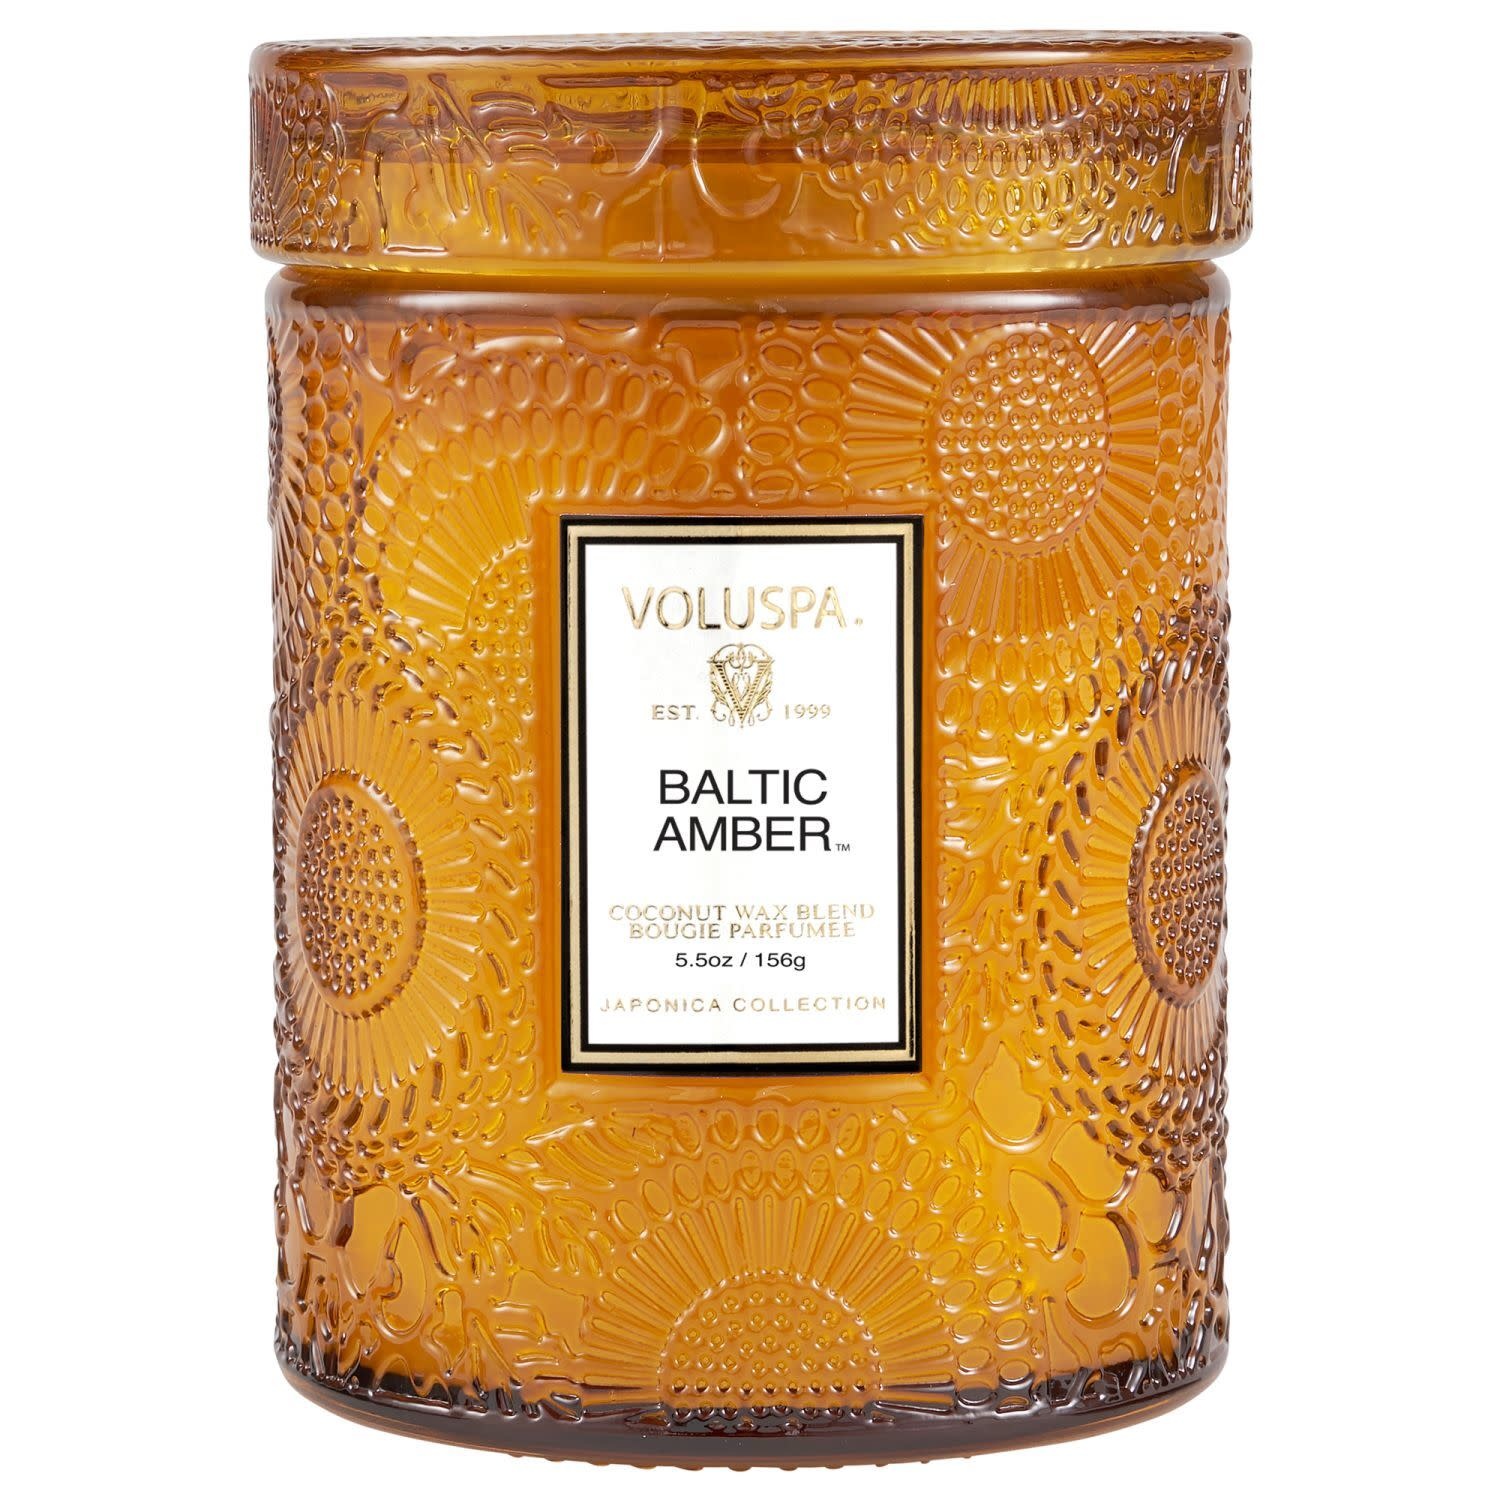 Voluspa Baltic Amber Small Jar Candle, 5.5oz